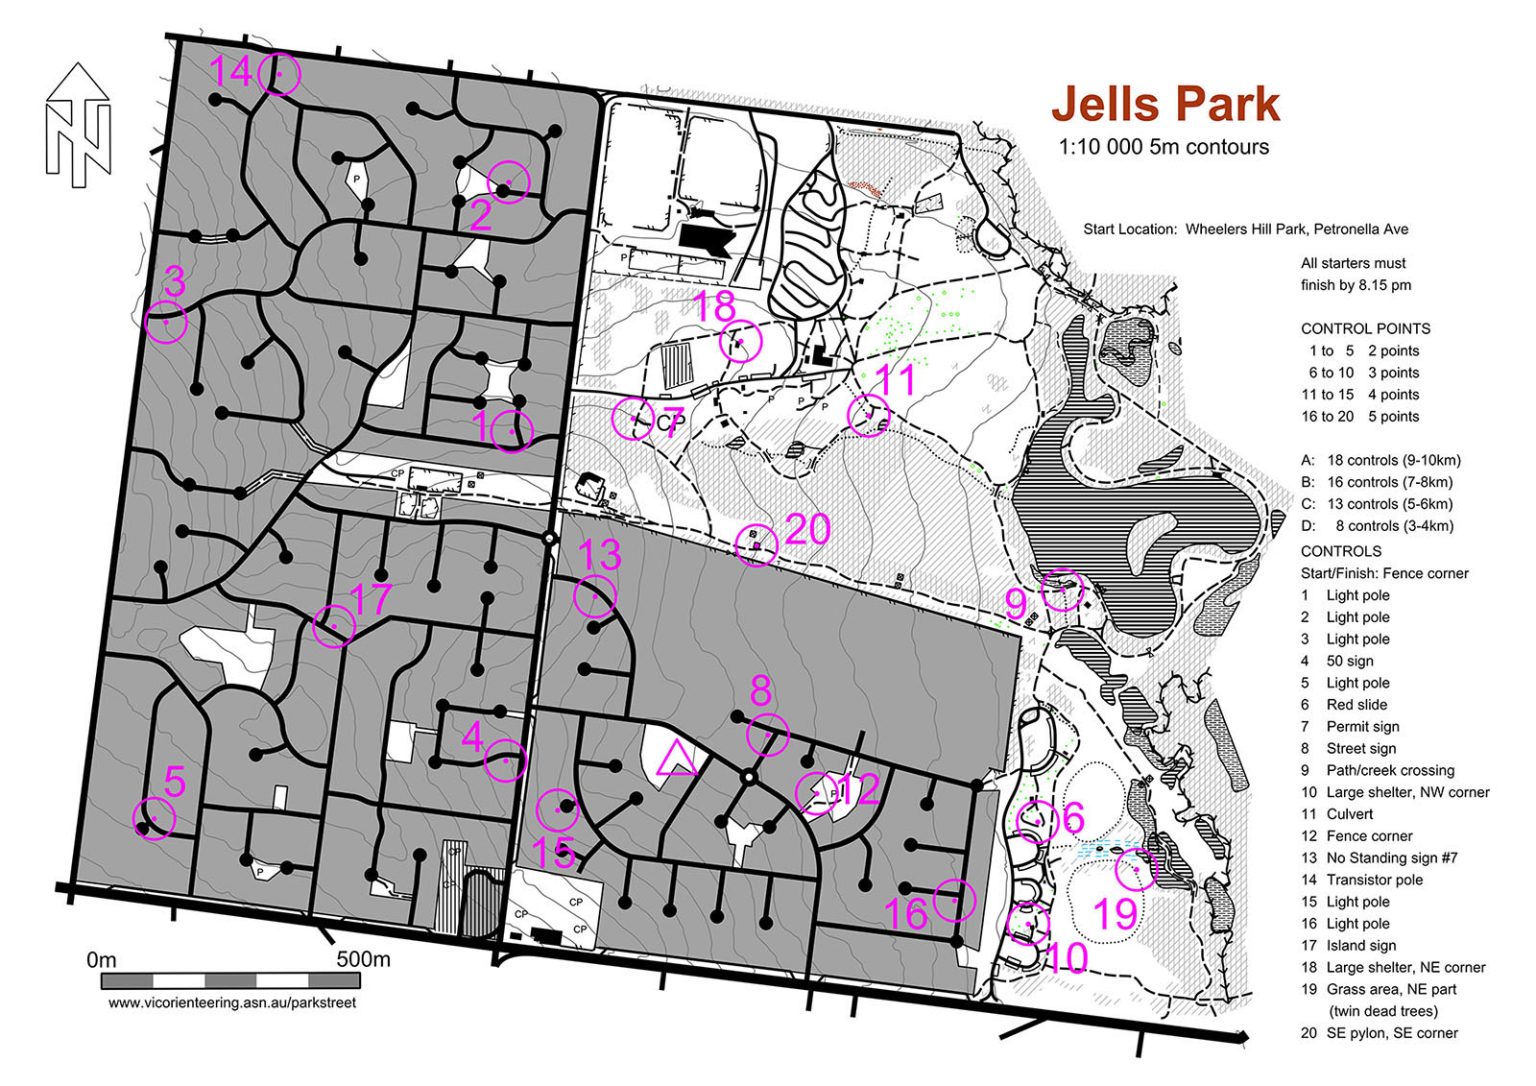 park/street orienteering map example